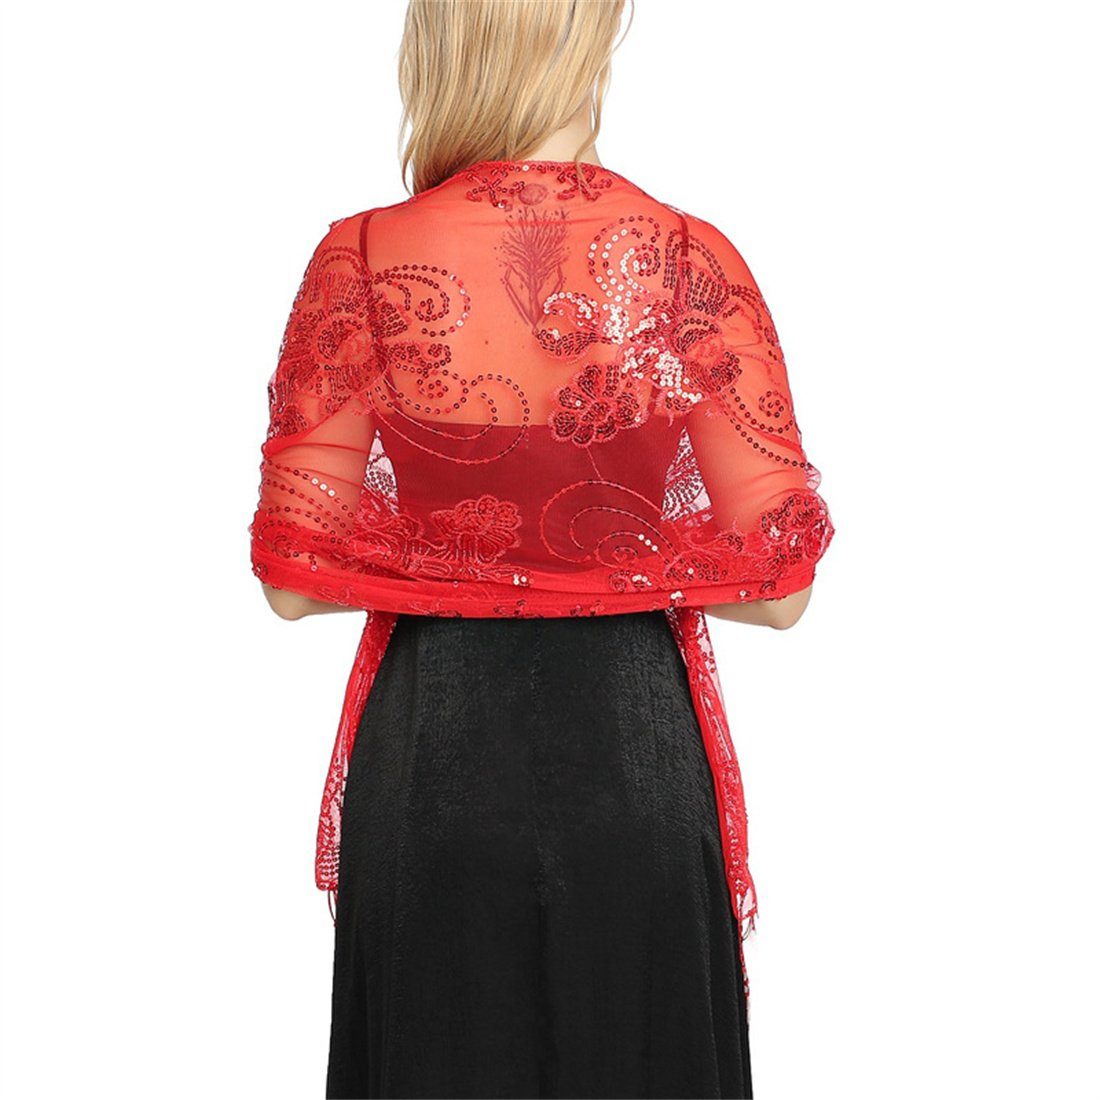 DÖRÖY Seidenschal Damen Netz Fransen Seidenschal, Rot Schal Abendkleid Schal Schal